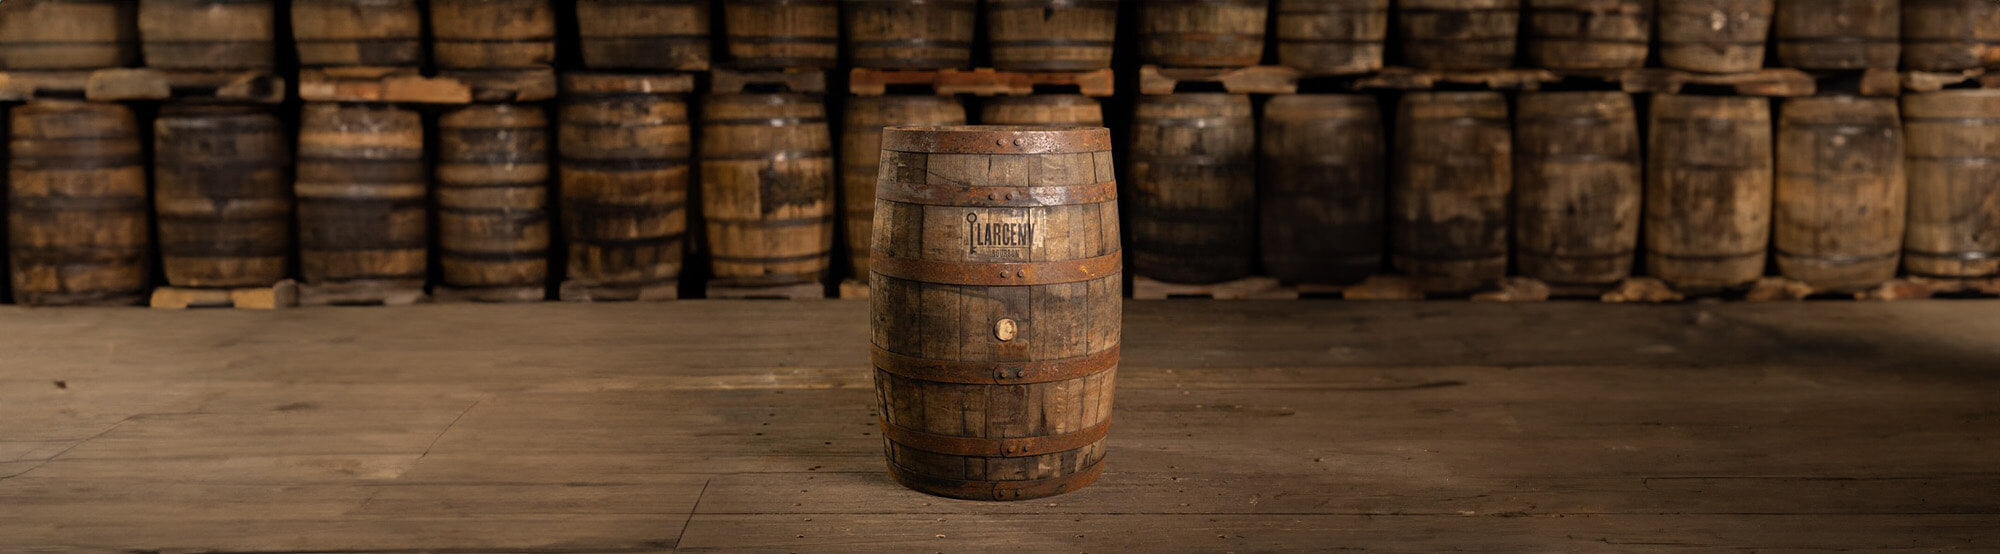 Used bourbon barrel